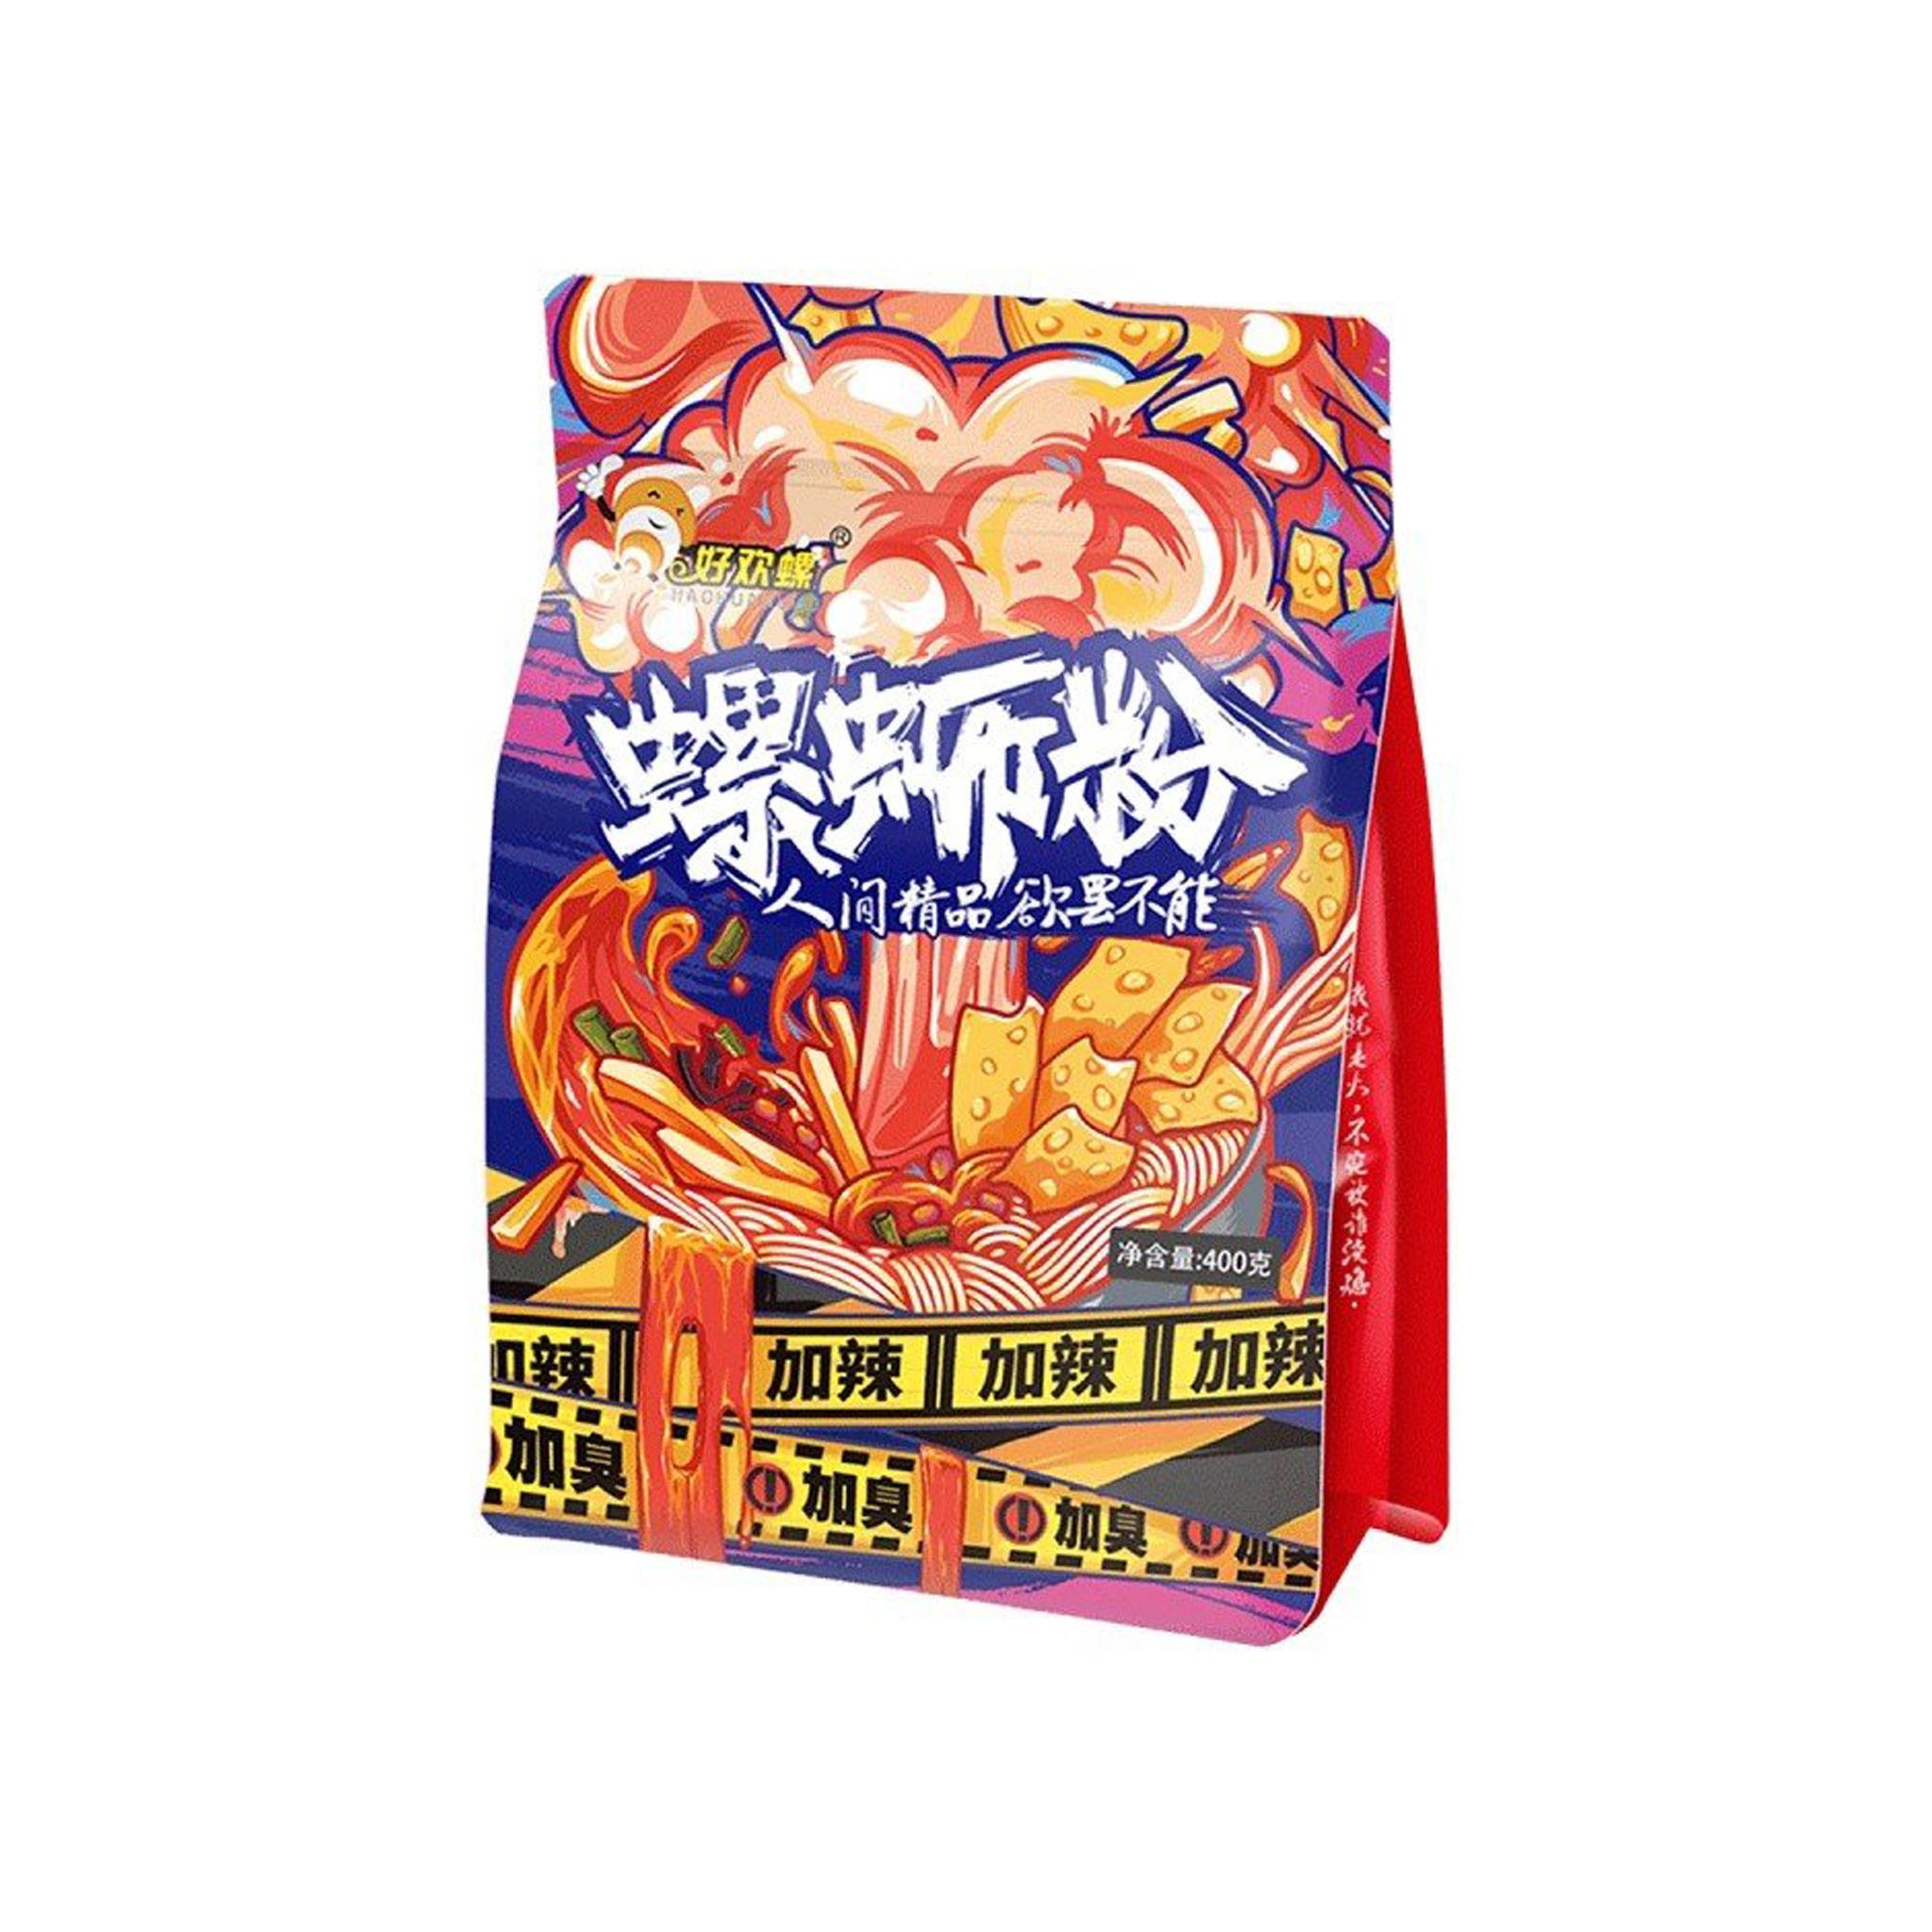 好欢螺 螺蛳粉 加臭加辣 HHL Instant Noodles- Super Spicy Flavour 400g